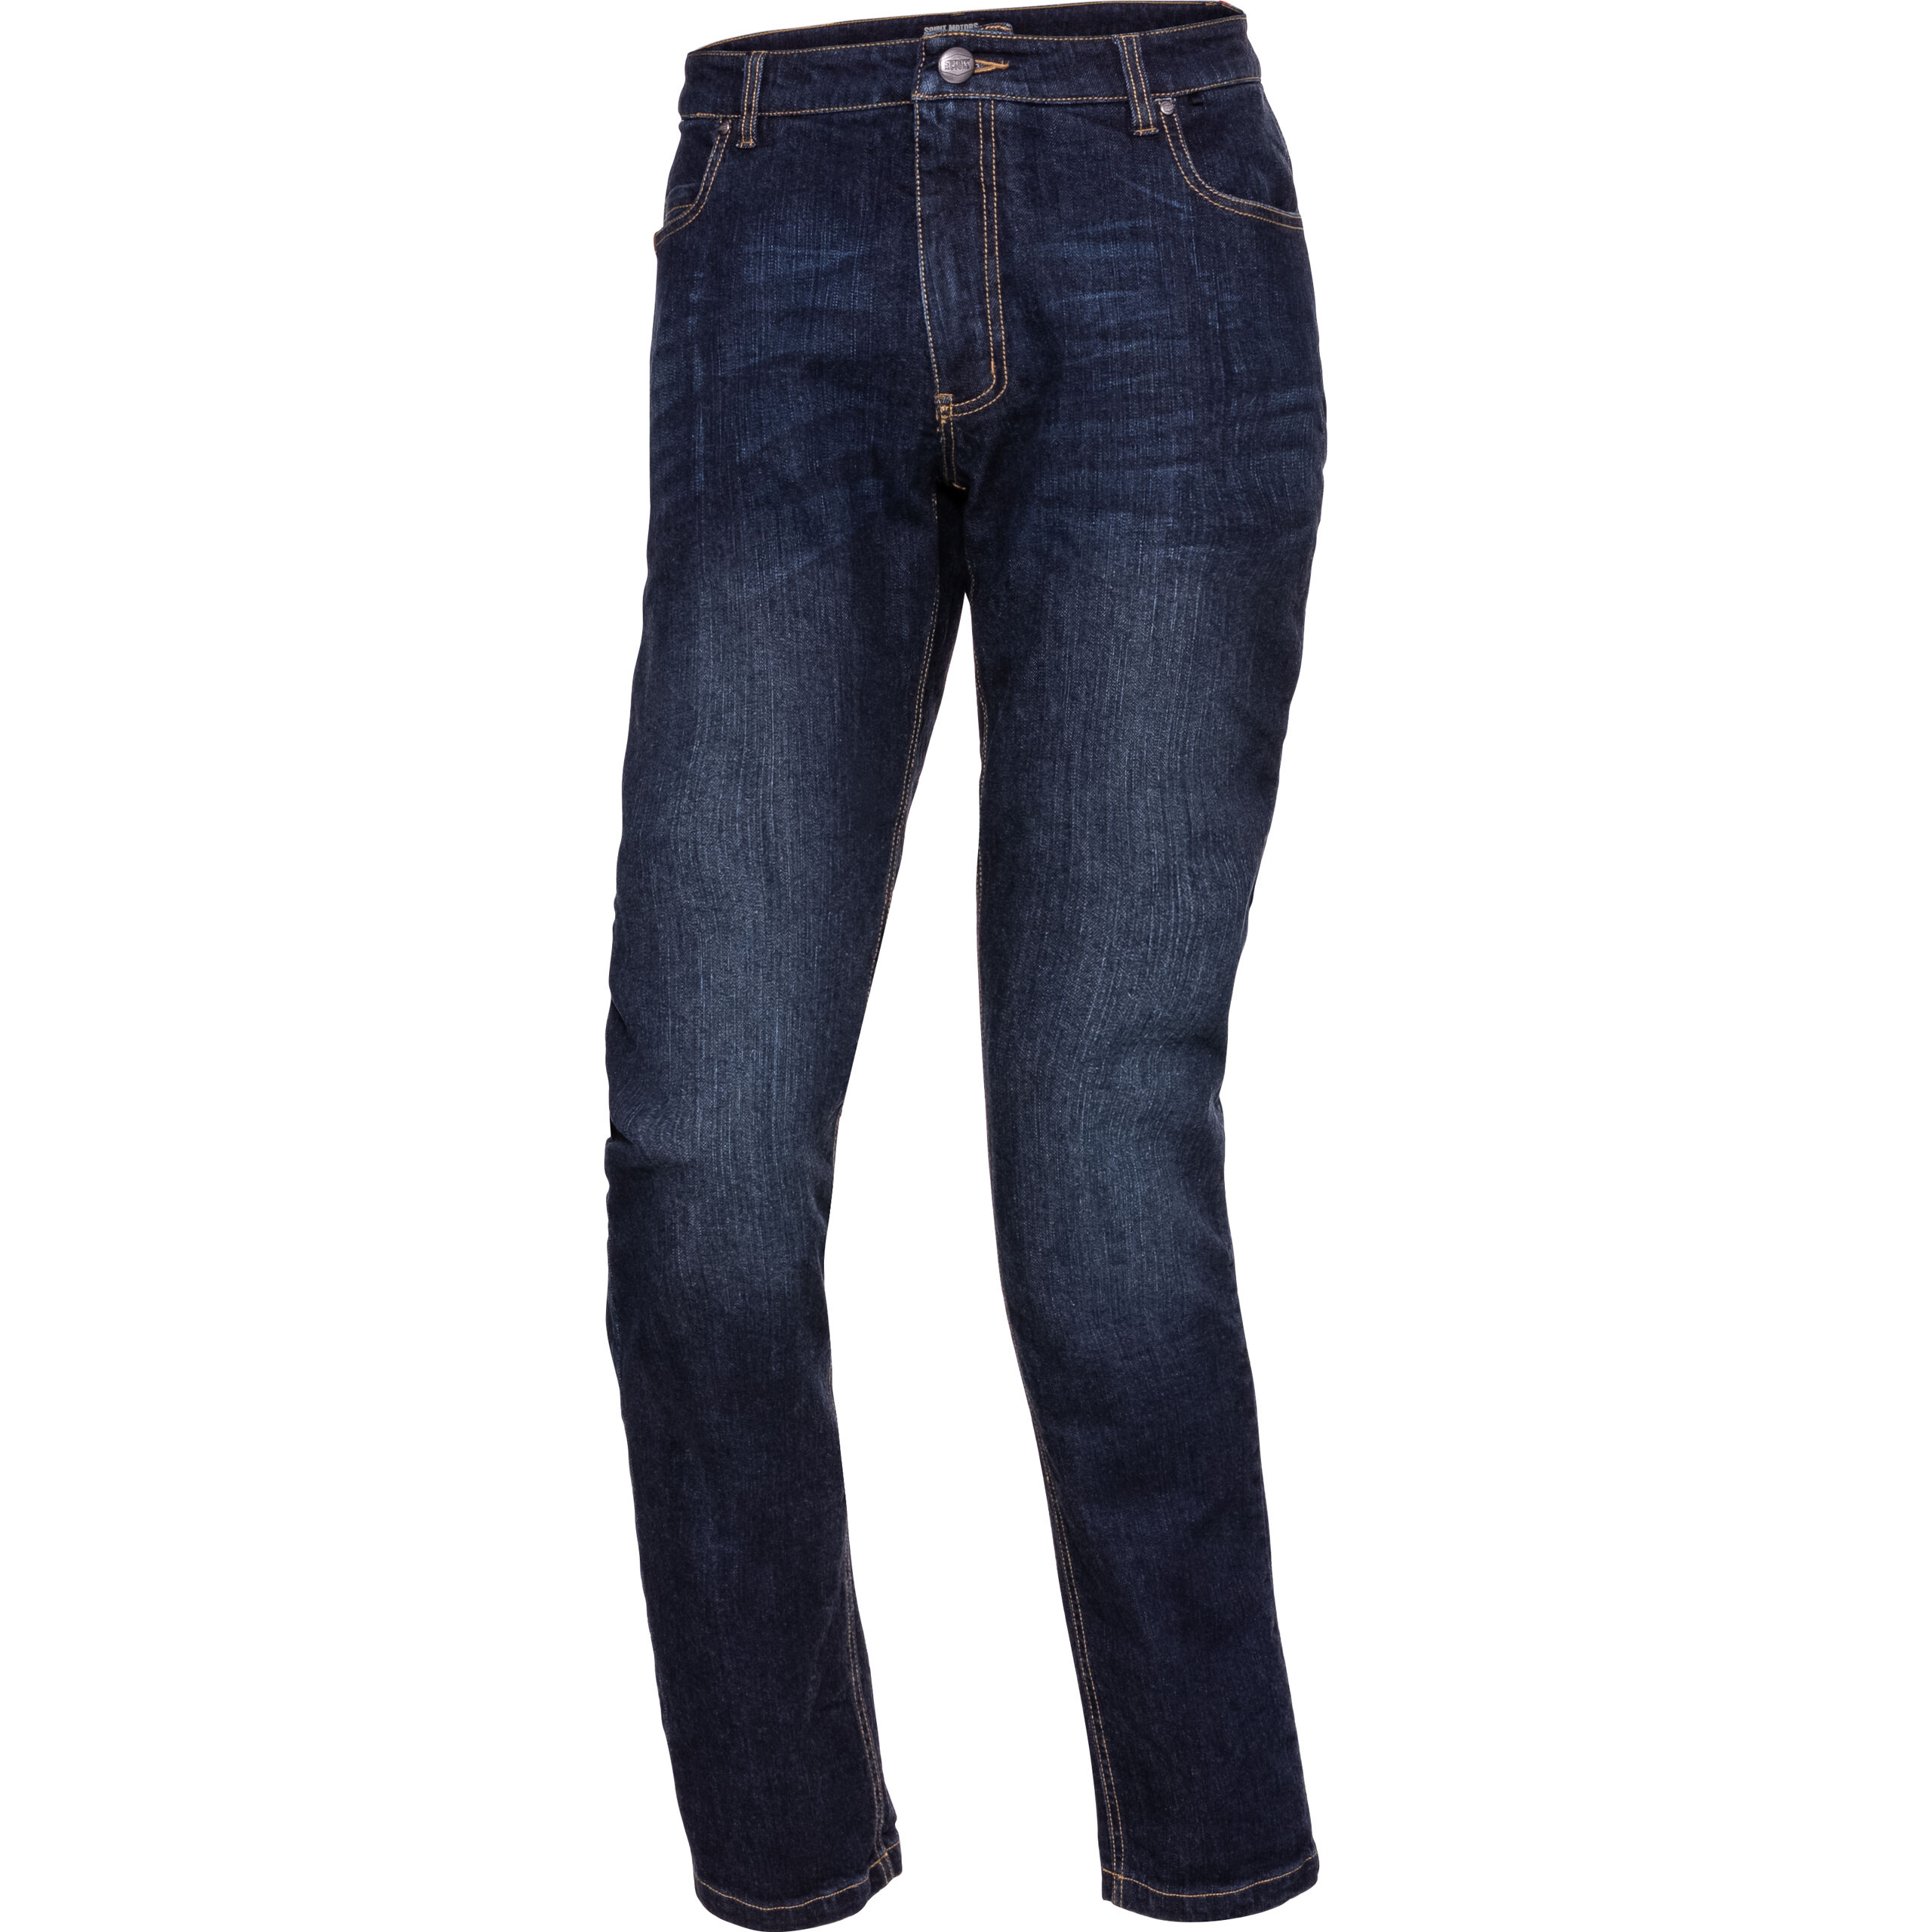 JEANS JAPAN SPIRIT REGULARE DENIM STRETCH - Shaft Jeans - Italian High  Quality Denim and Apparel